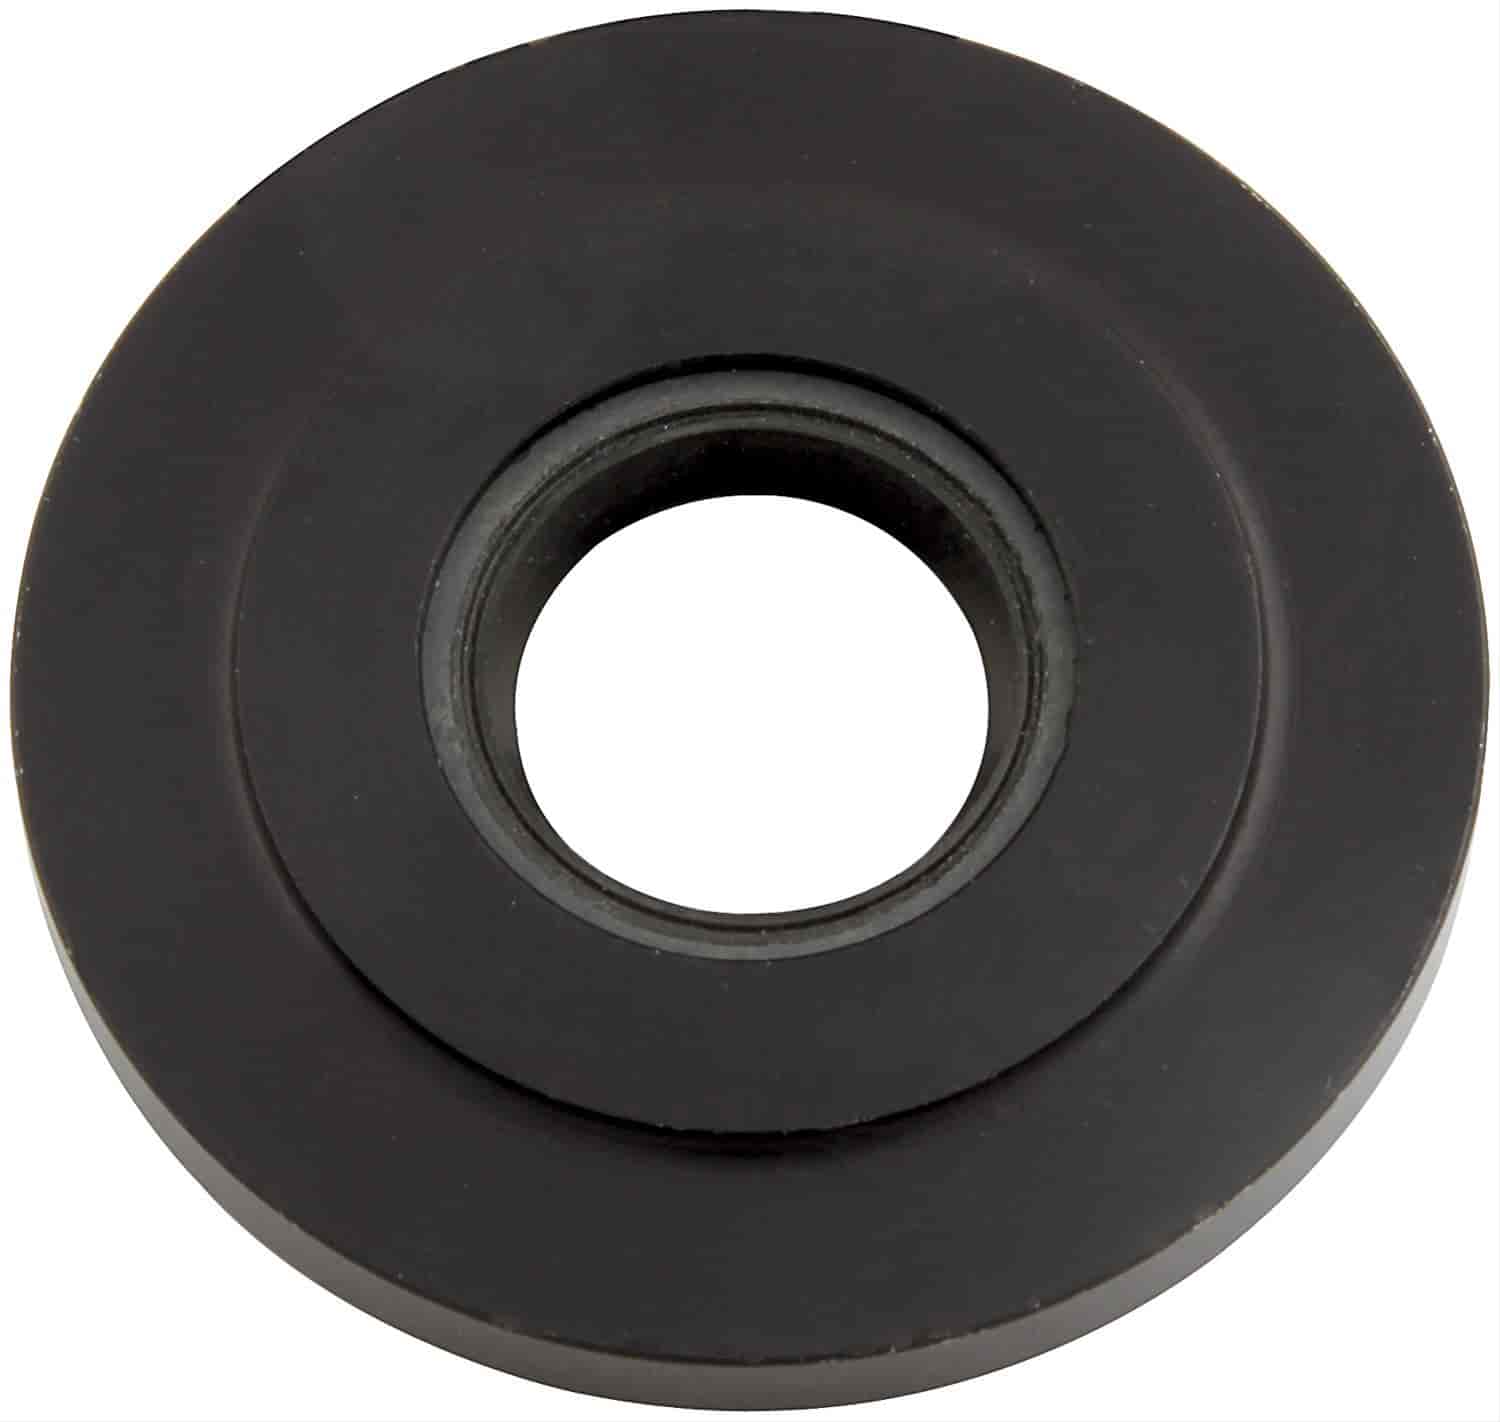 Cam Seal Plate Black 2.10